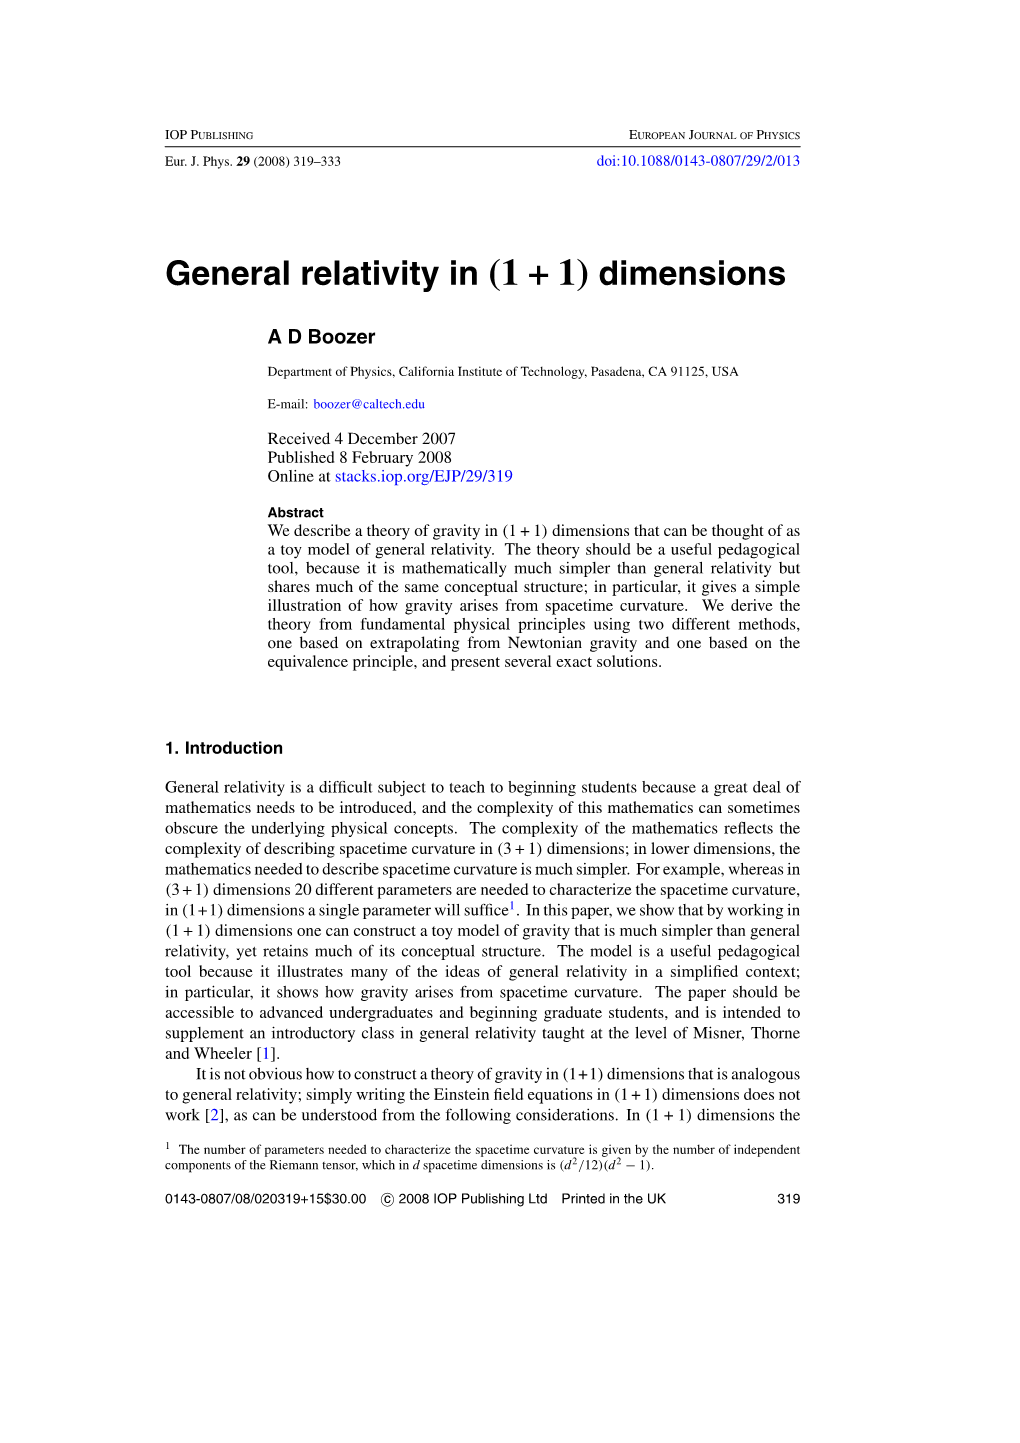 General Relativity in (1 + 1) Dimensions